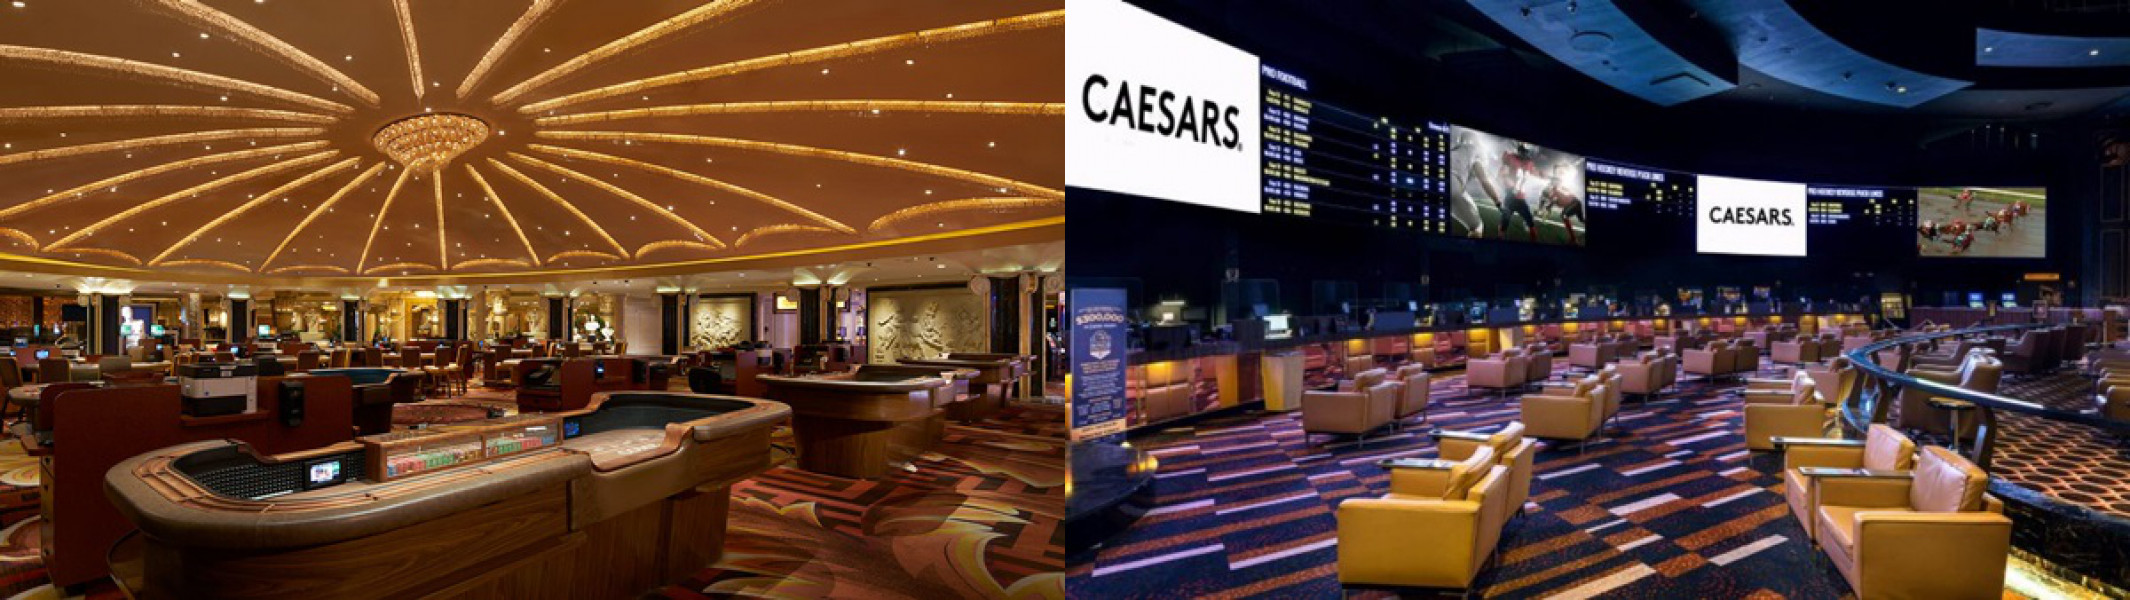 caesars palace casino online